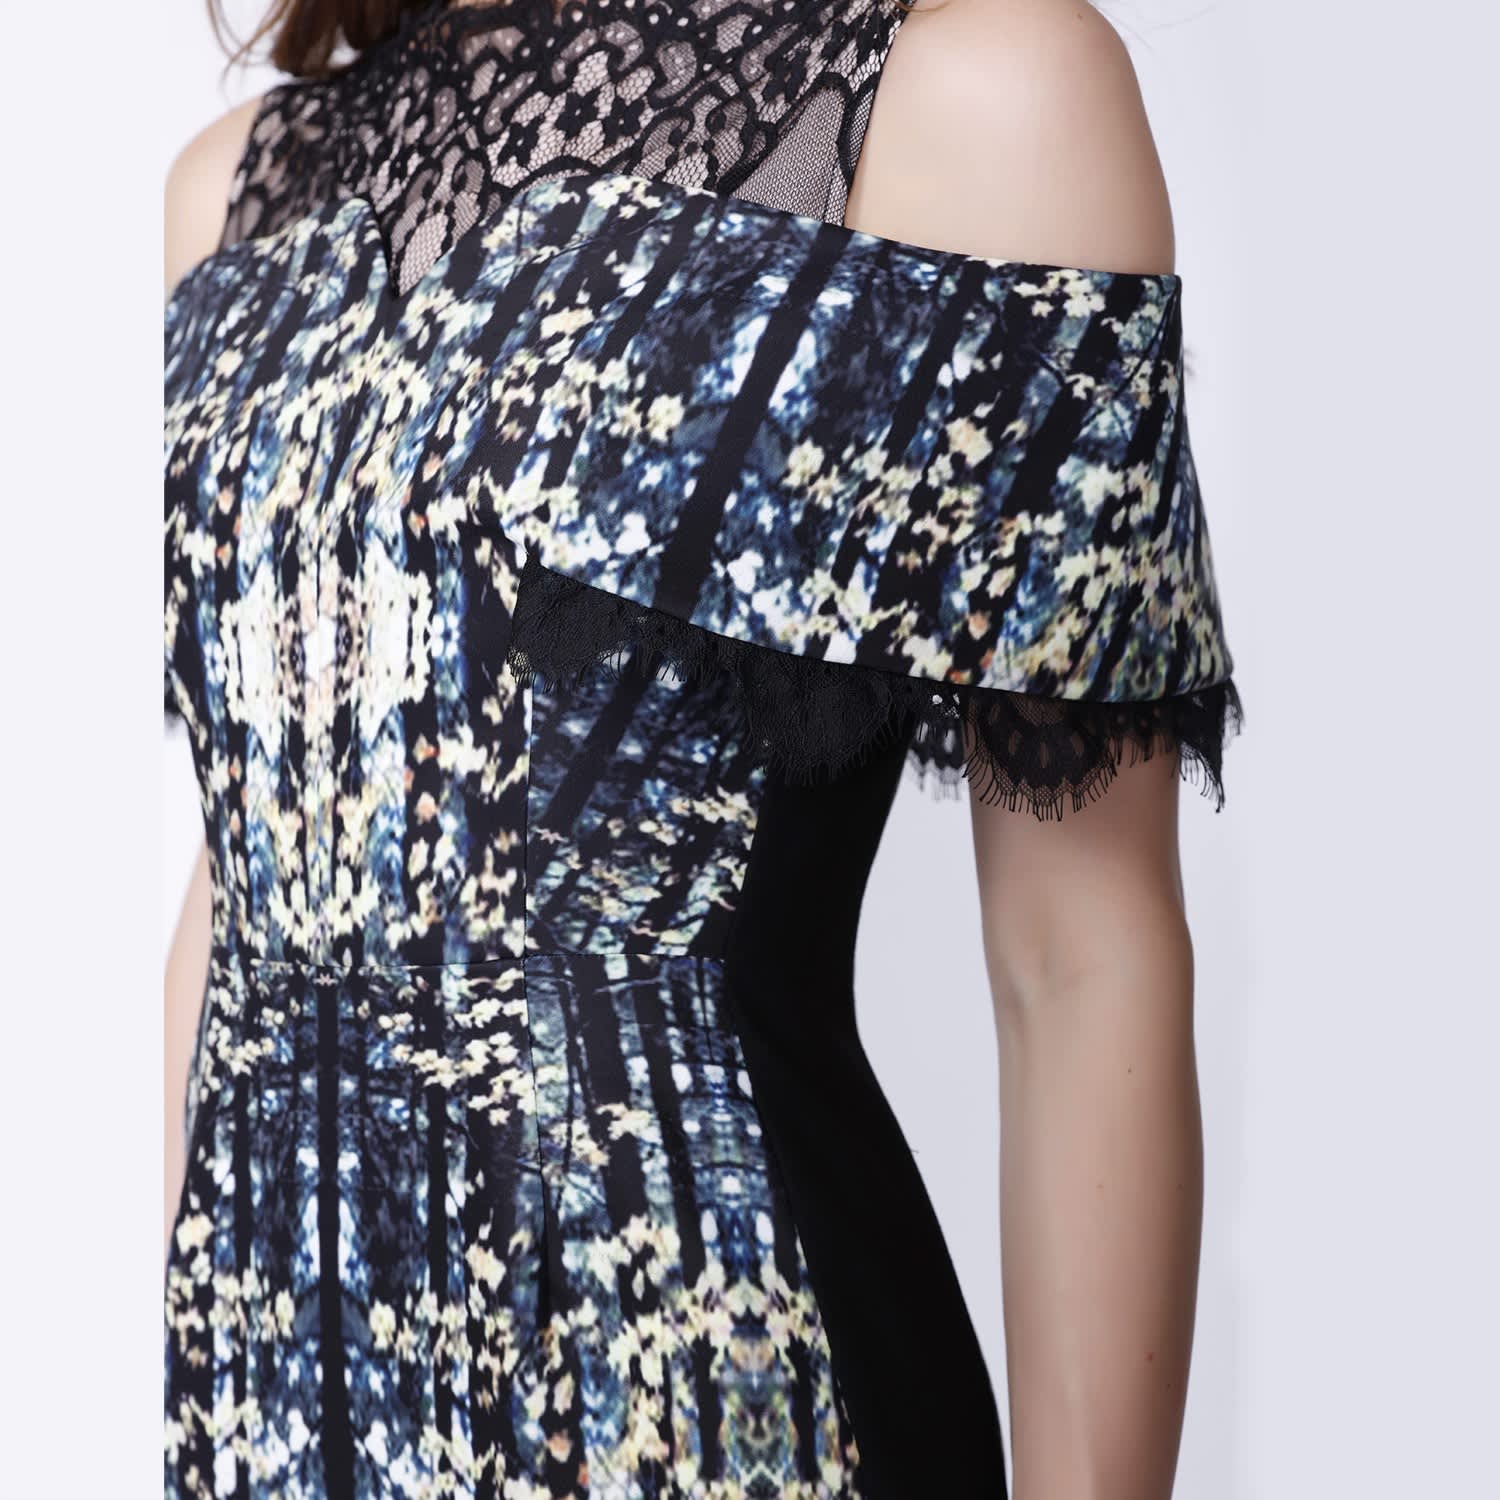 Cobalt Lace Dress by Kaleidoscope